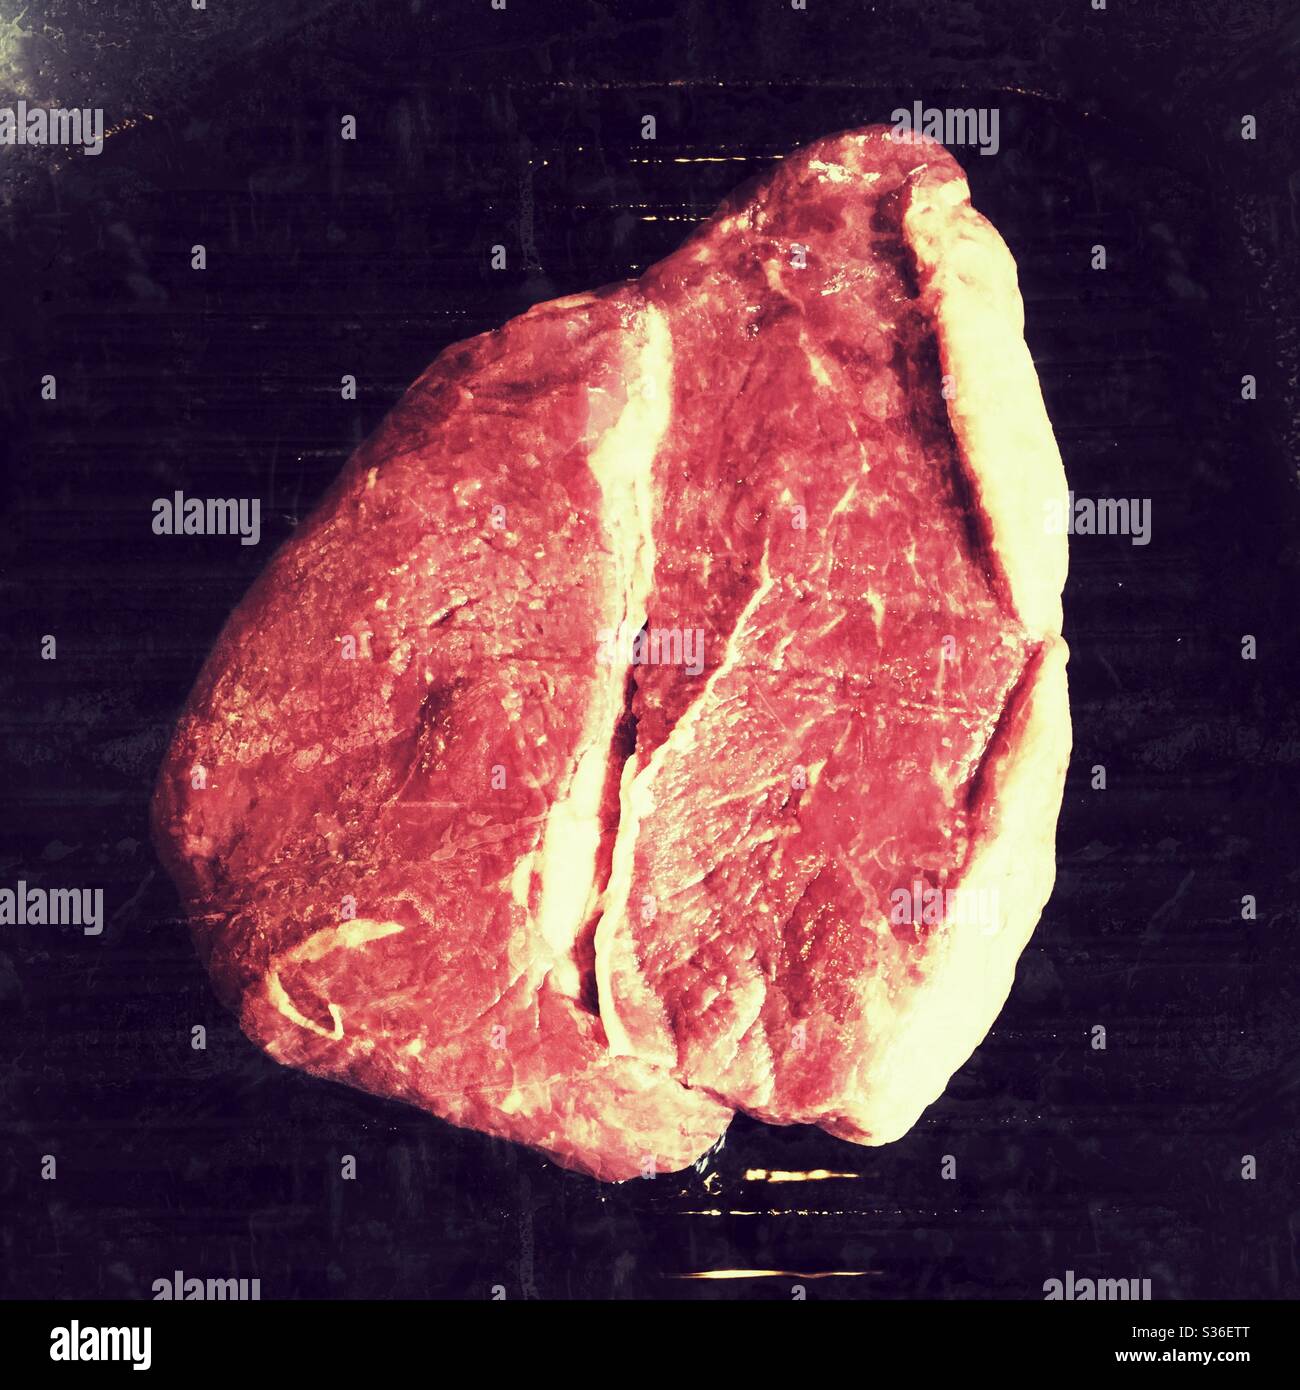 Large rump steak. Stock Photo